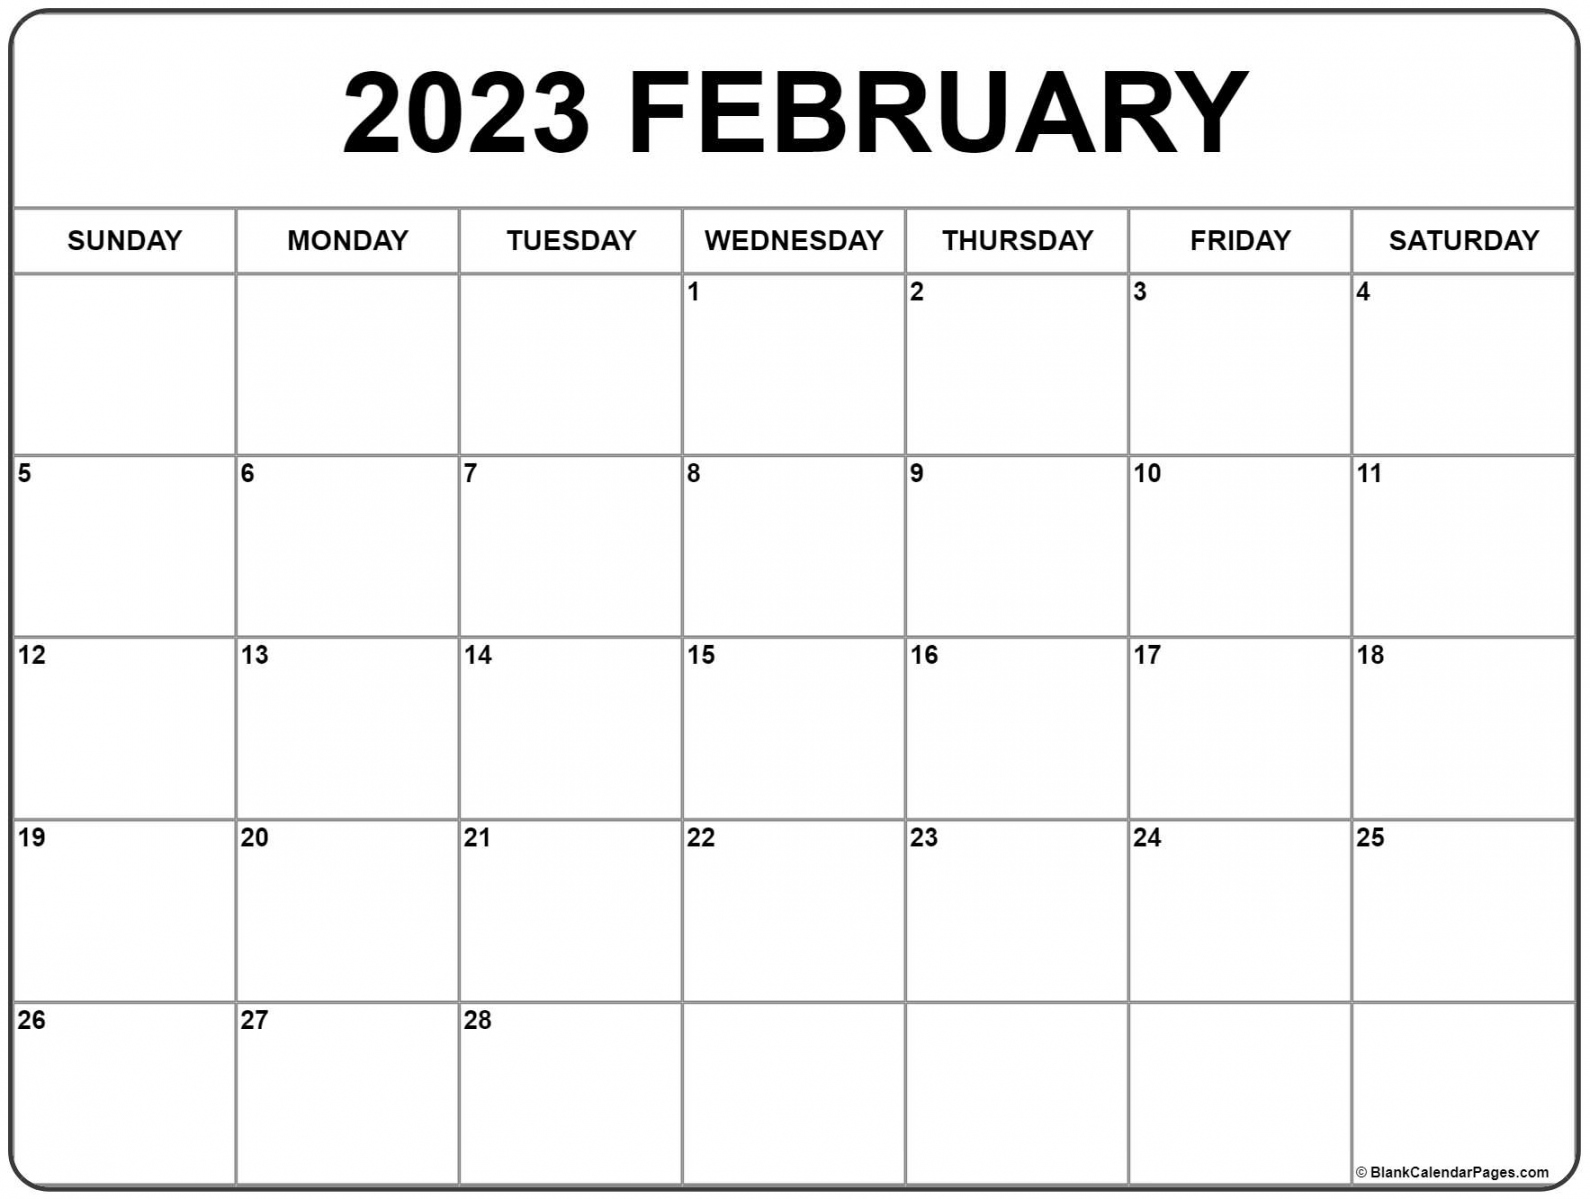 Free Printable Calendar February 2023 - Printable - February  calendar  free printable calendar